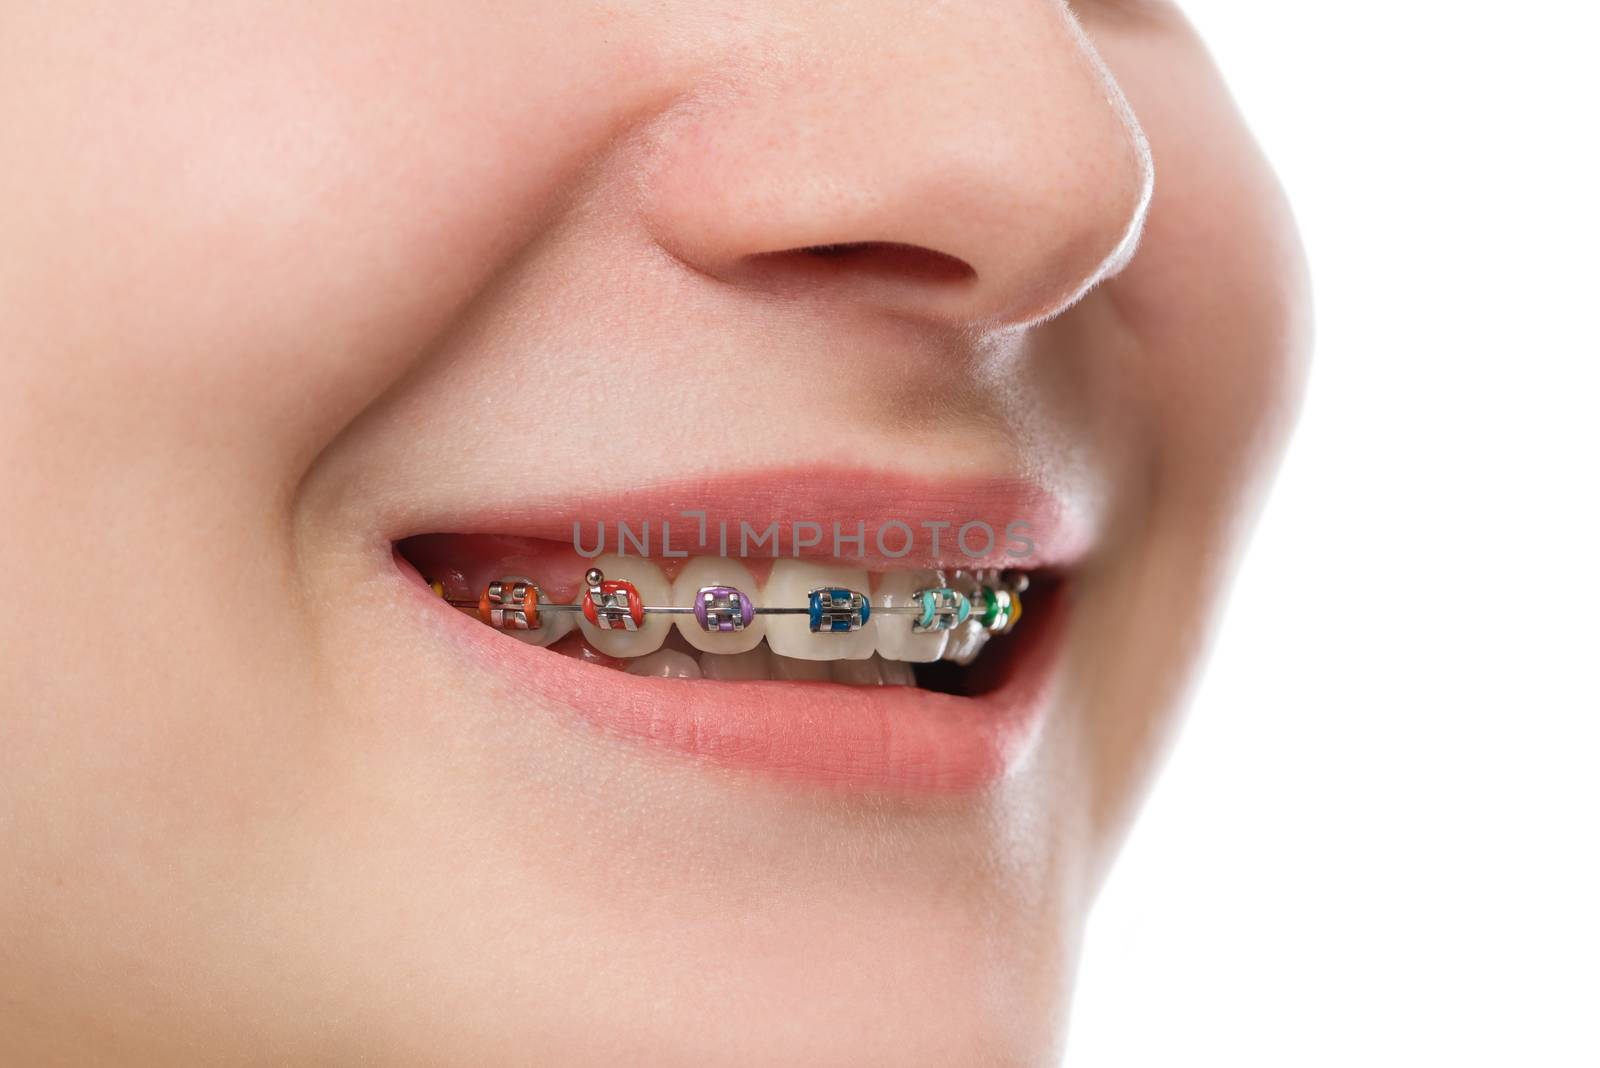 Closeup multicolored Braces on Teeth. Beautiful Female Smile portrait with Self-ligating Braces. Orthodontic Treatment.